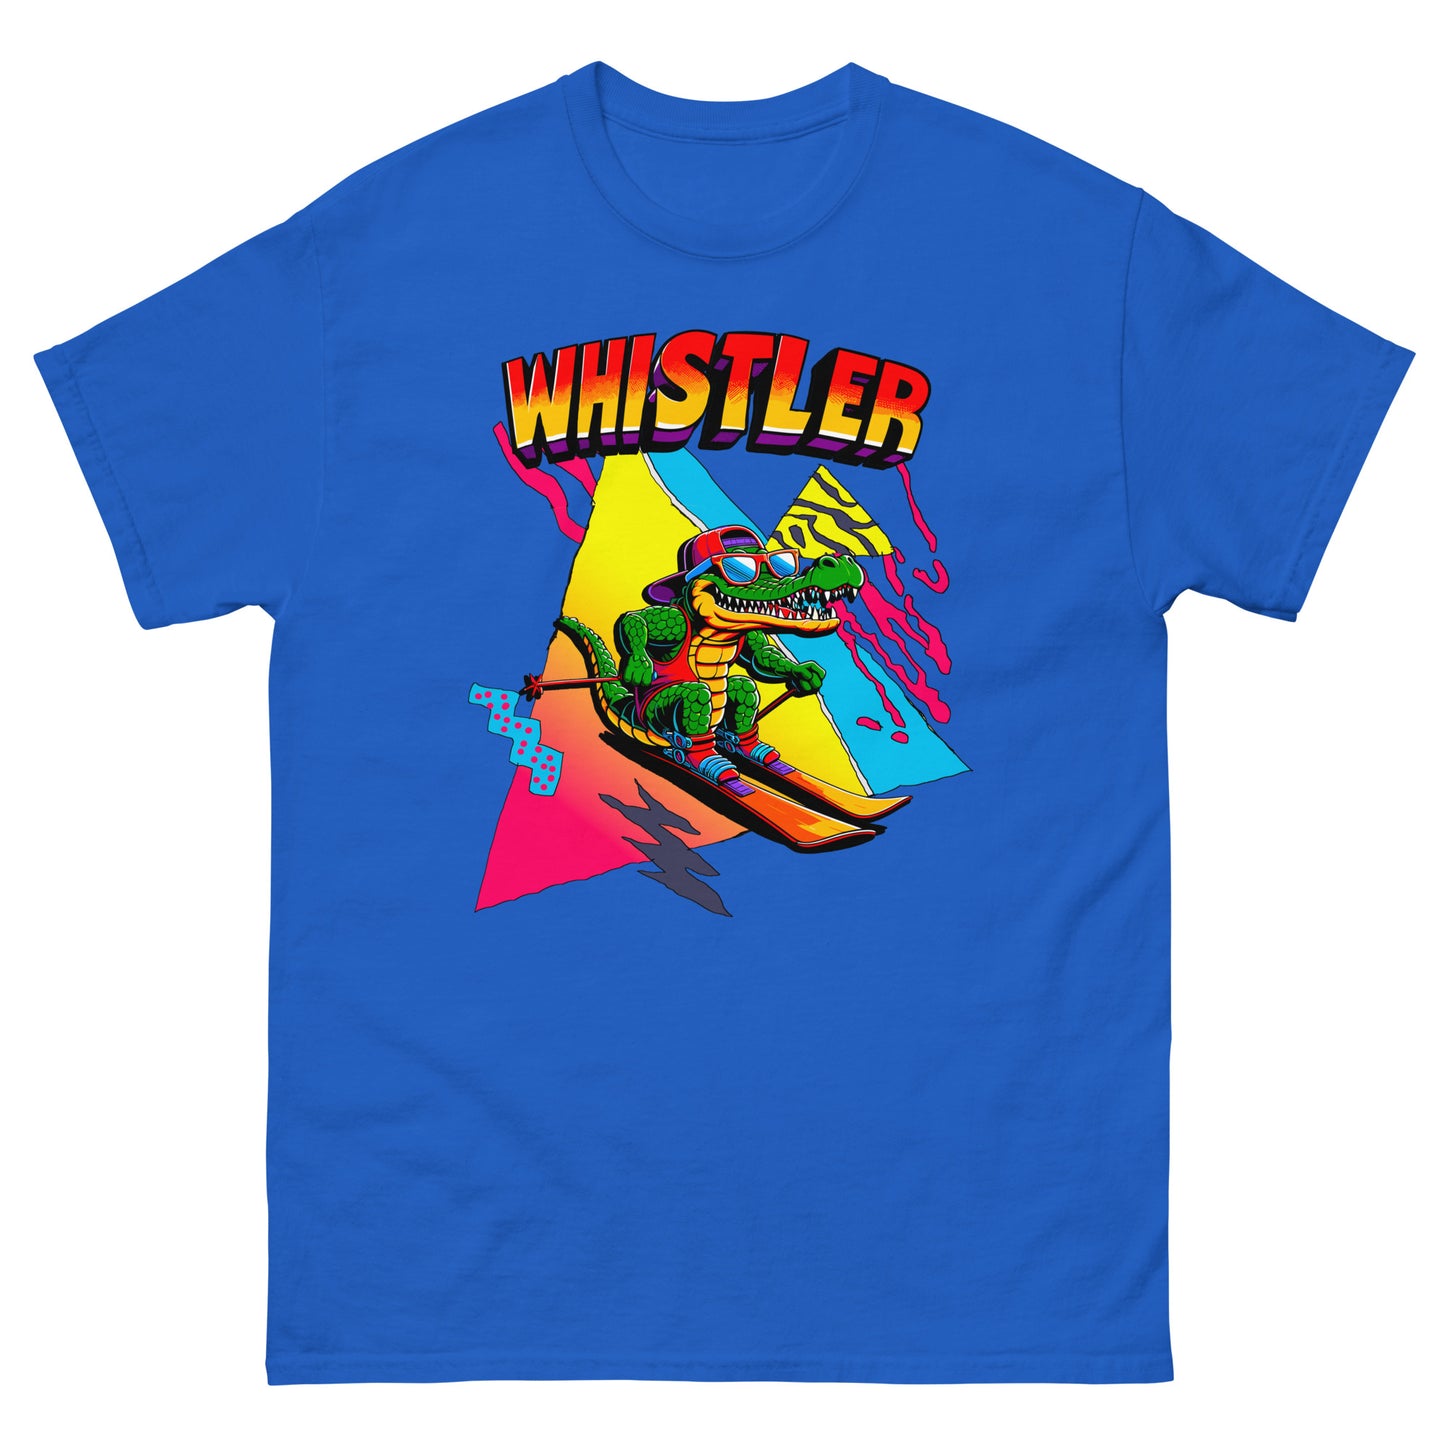 Whistler Skiing Gator Retro T-shirt printed by Whistler Shirts